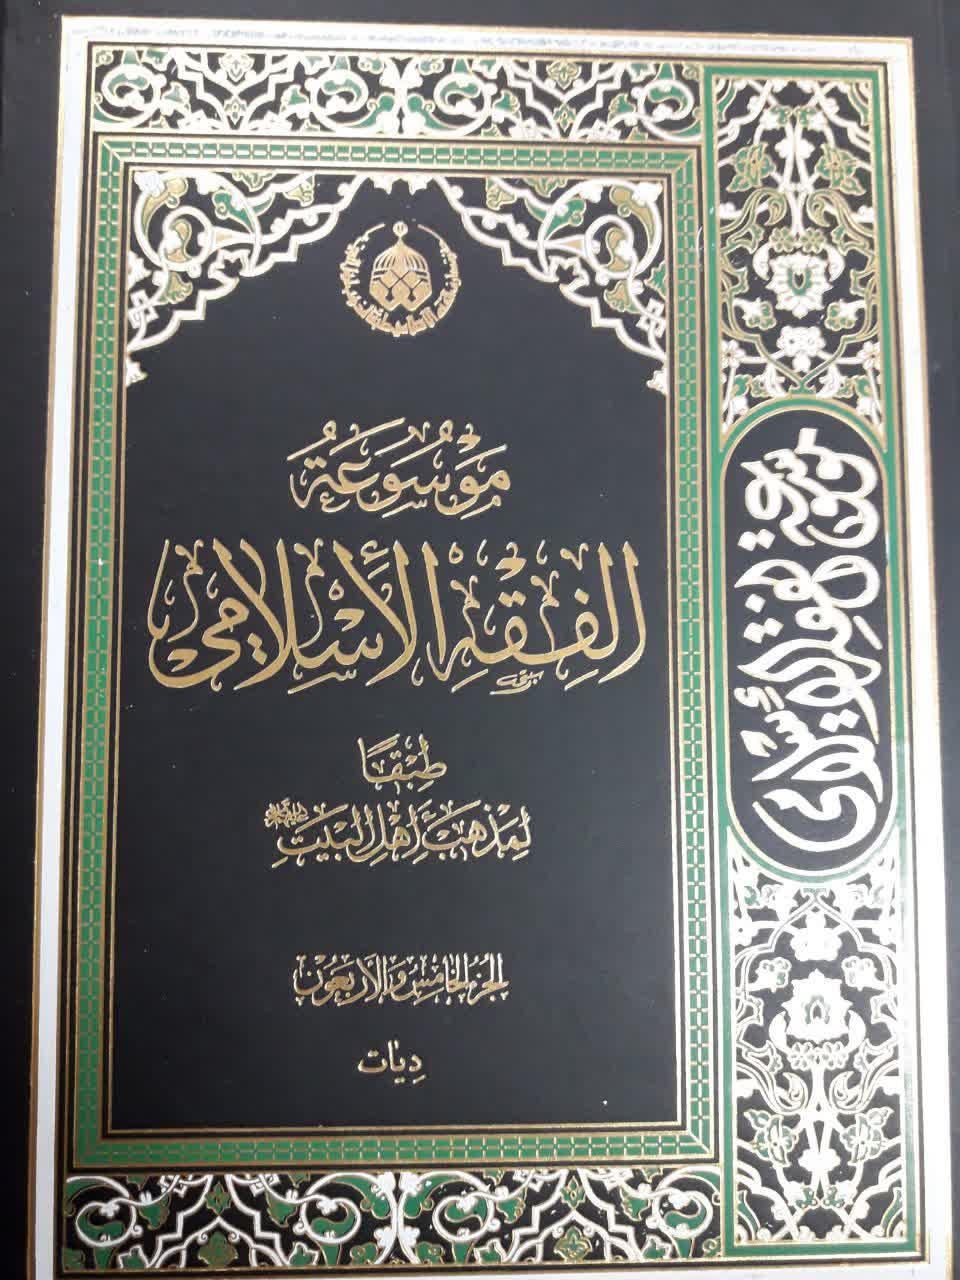 ت/جلد 45 موسوعة الفقه الاسلامی به چاپ رسید